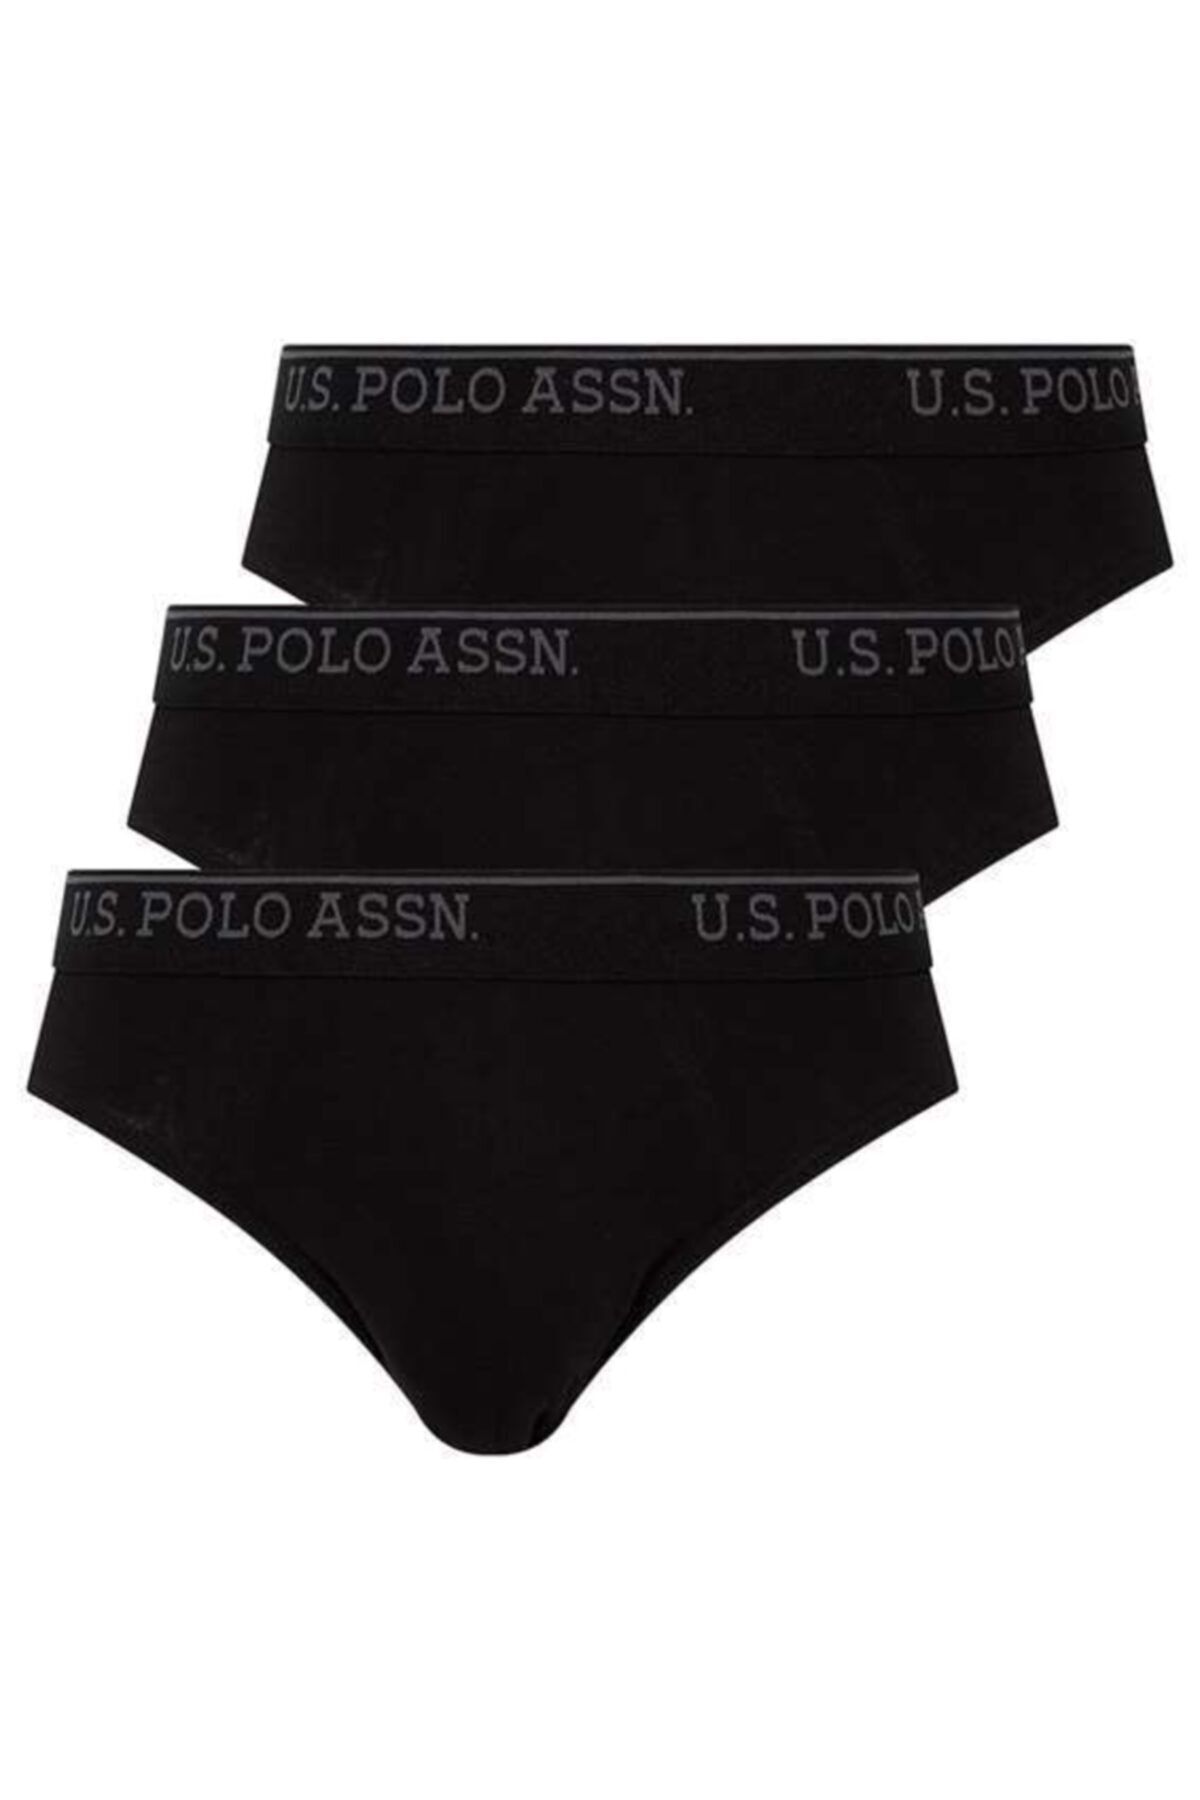 U.S. Polo Assn. Erkek Üçlü Slip Siyah Külot